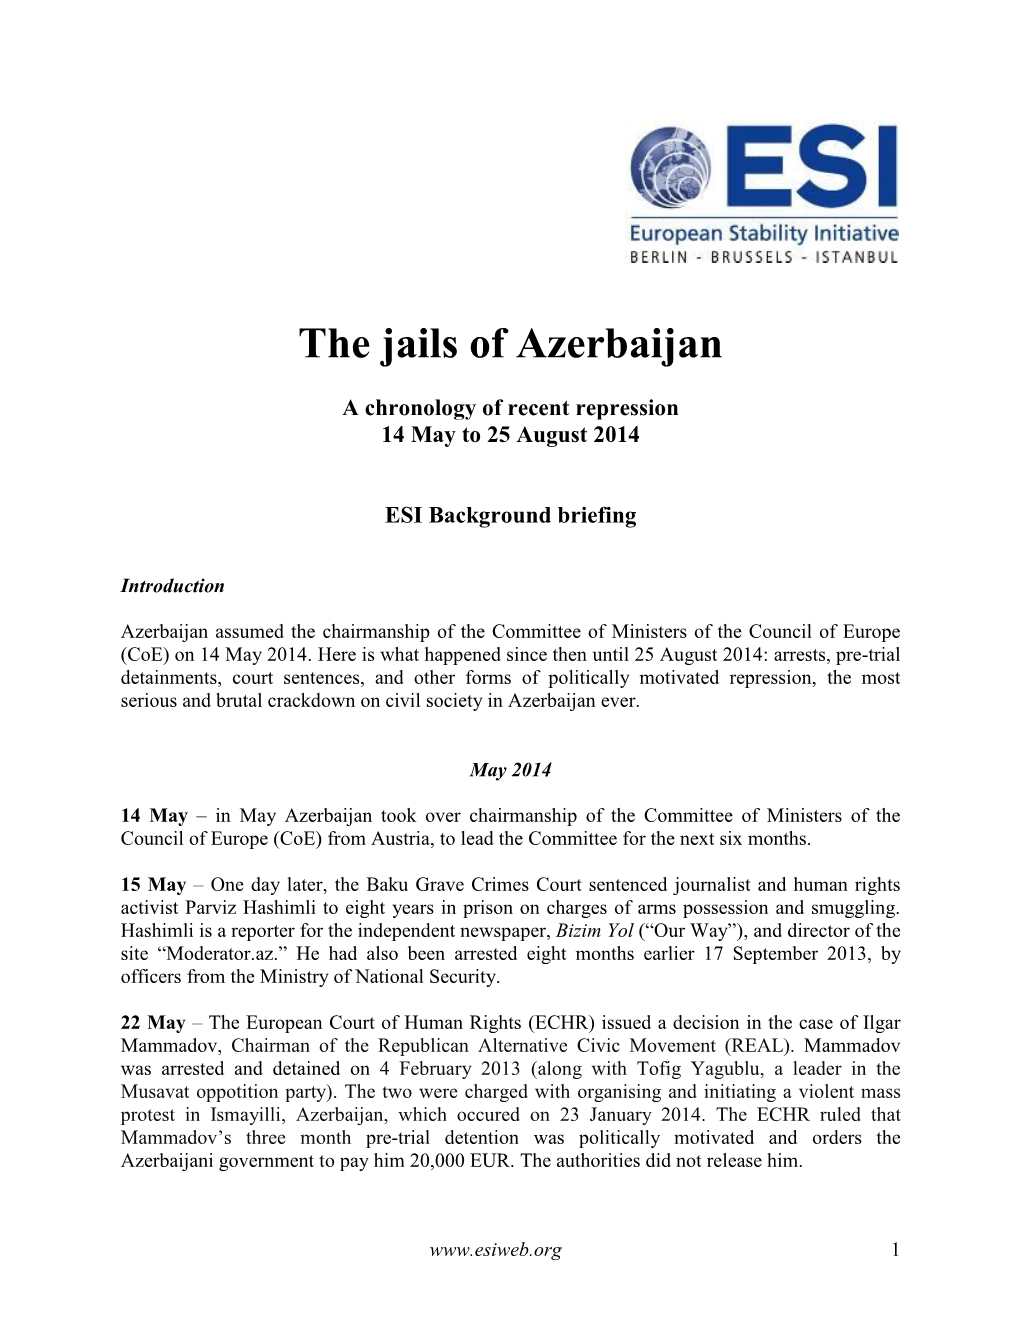 The Jails of Azerbaijan